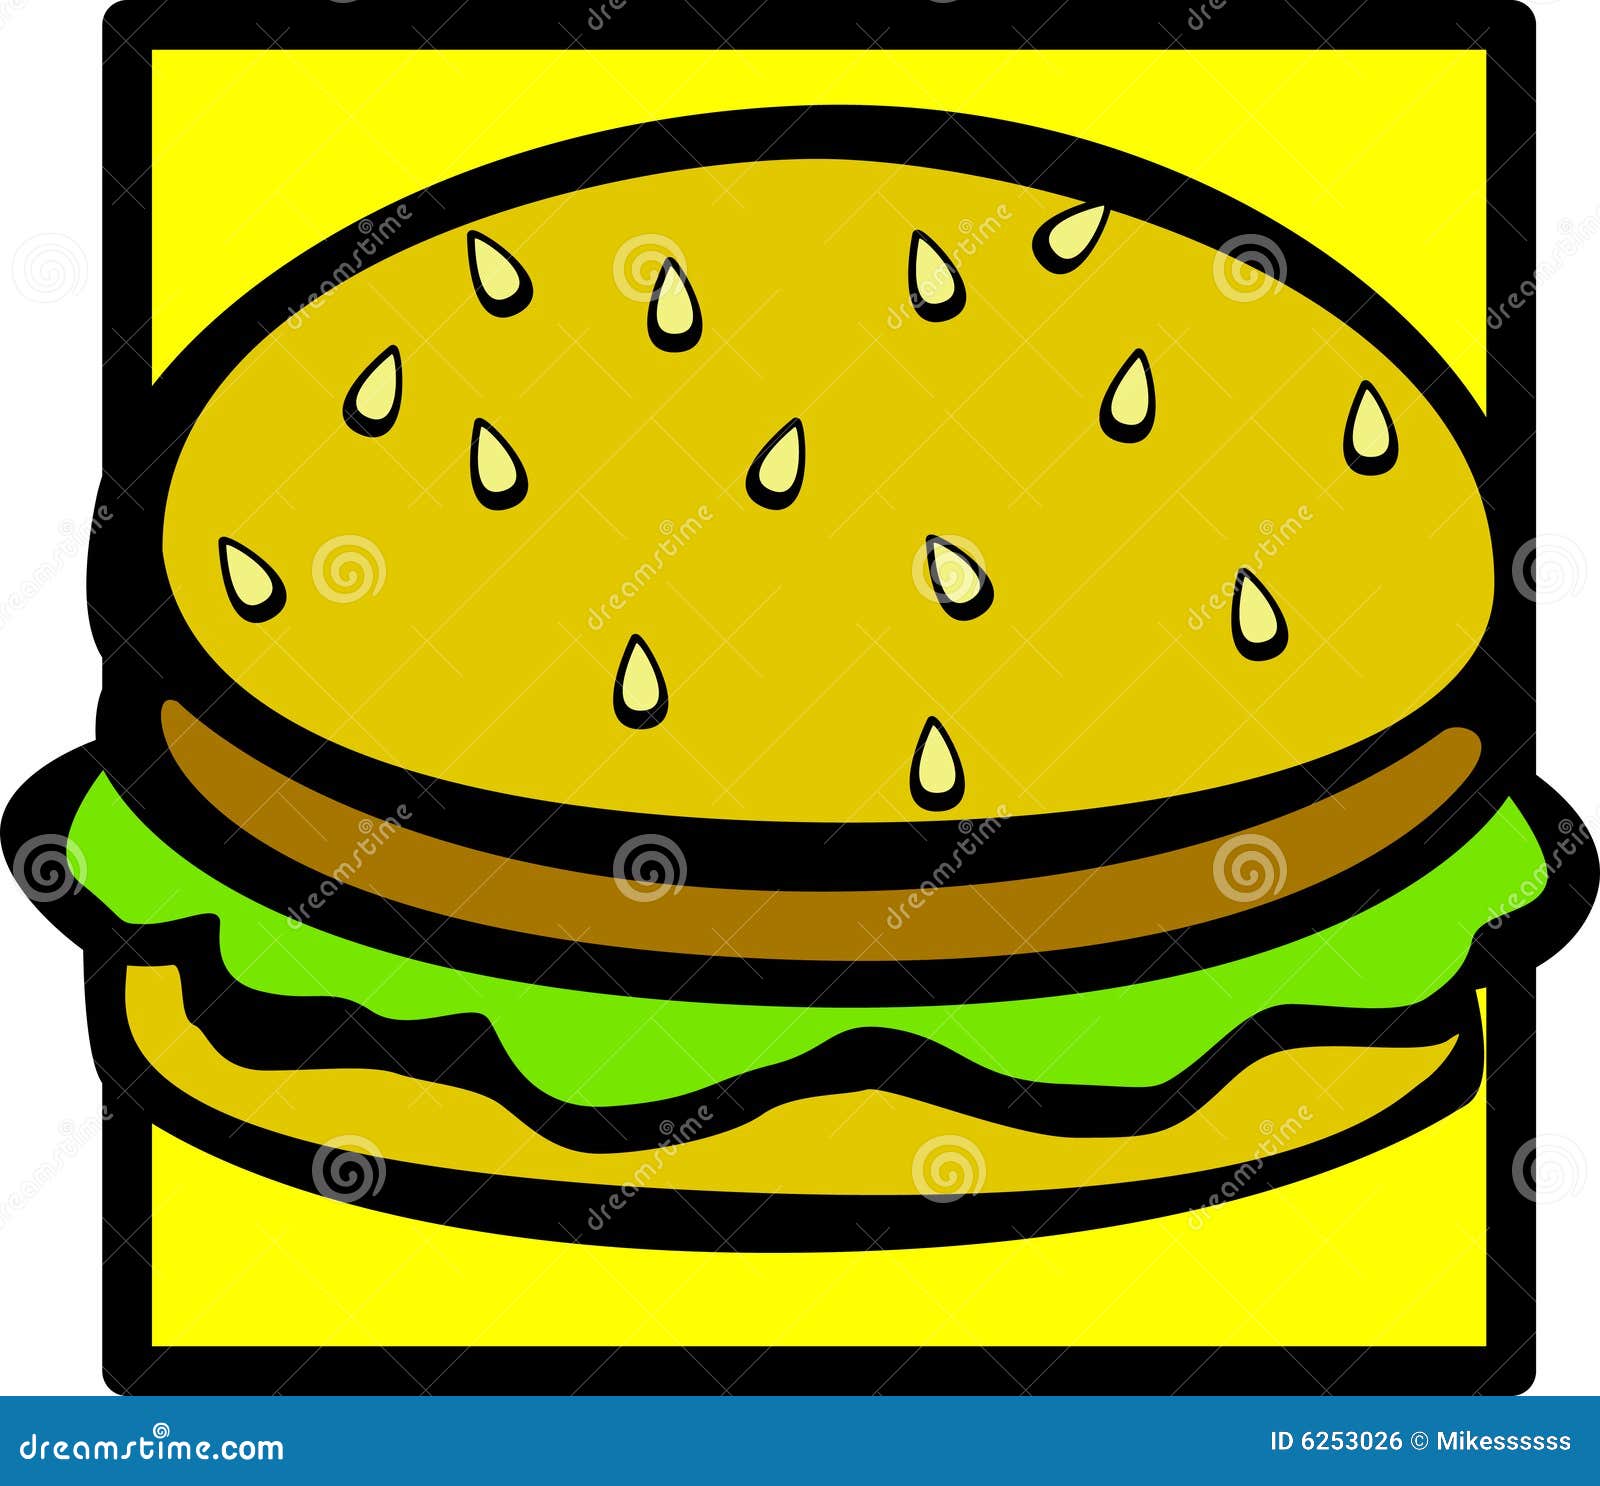 burger king clip art free - photo #31